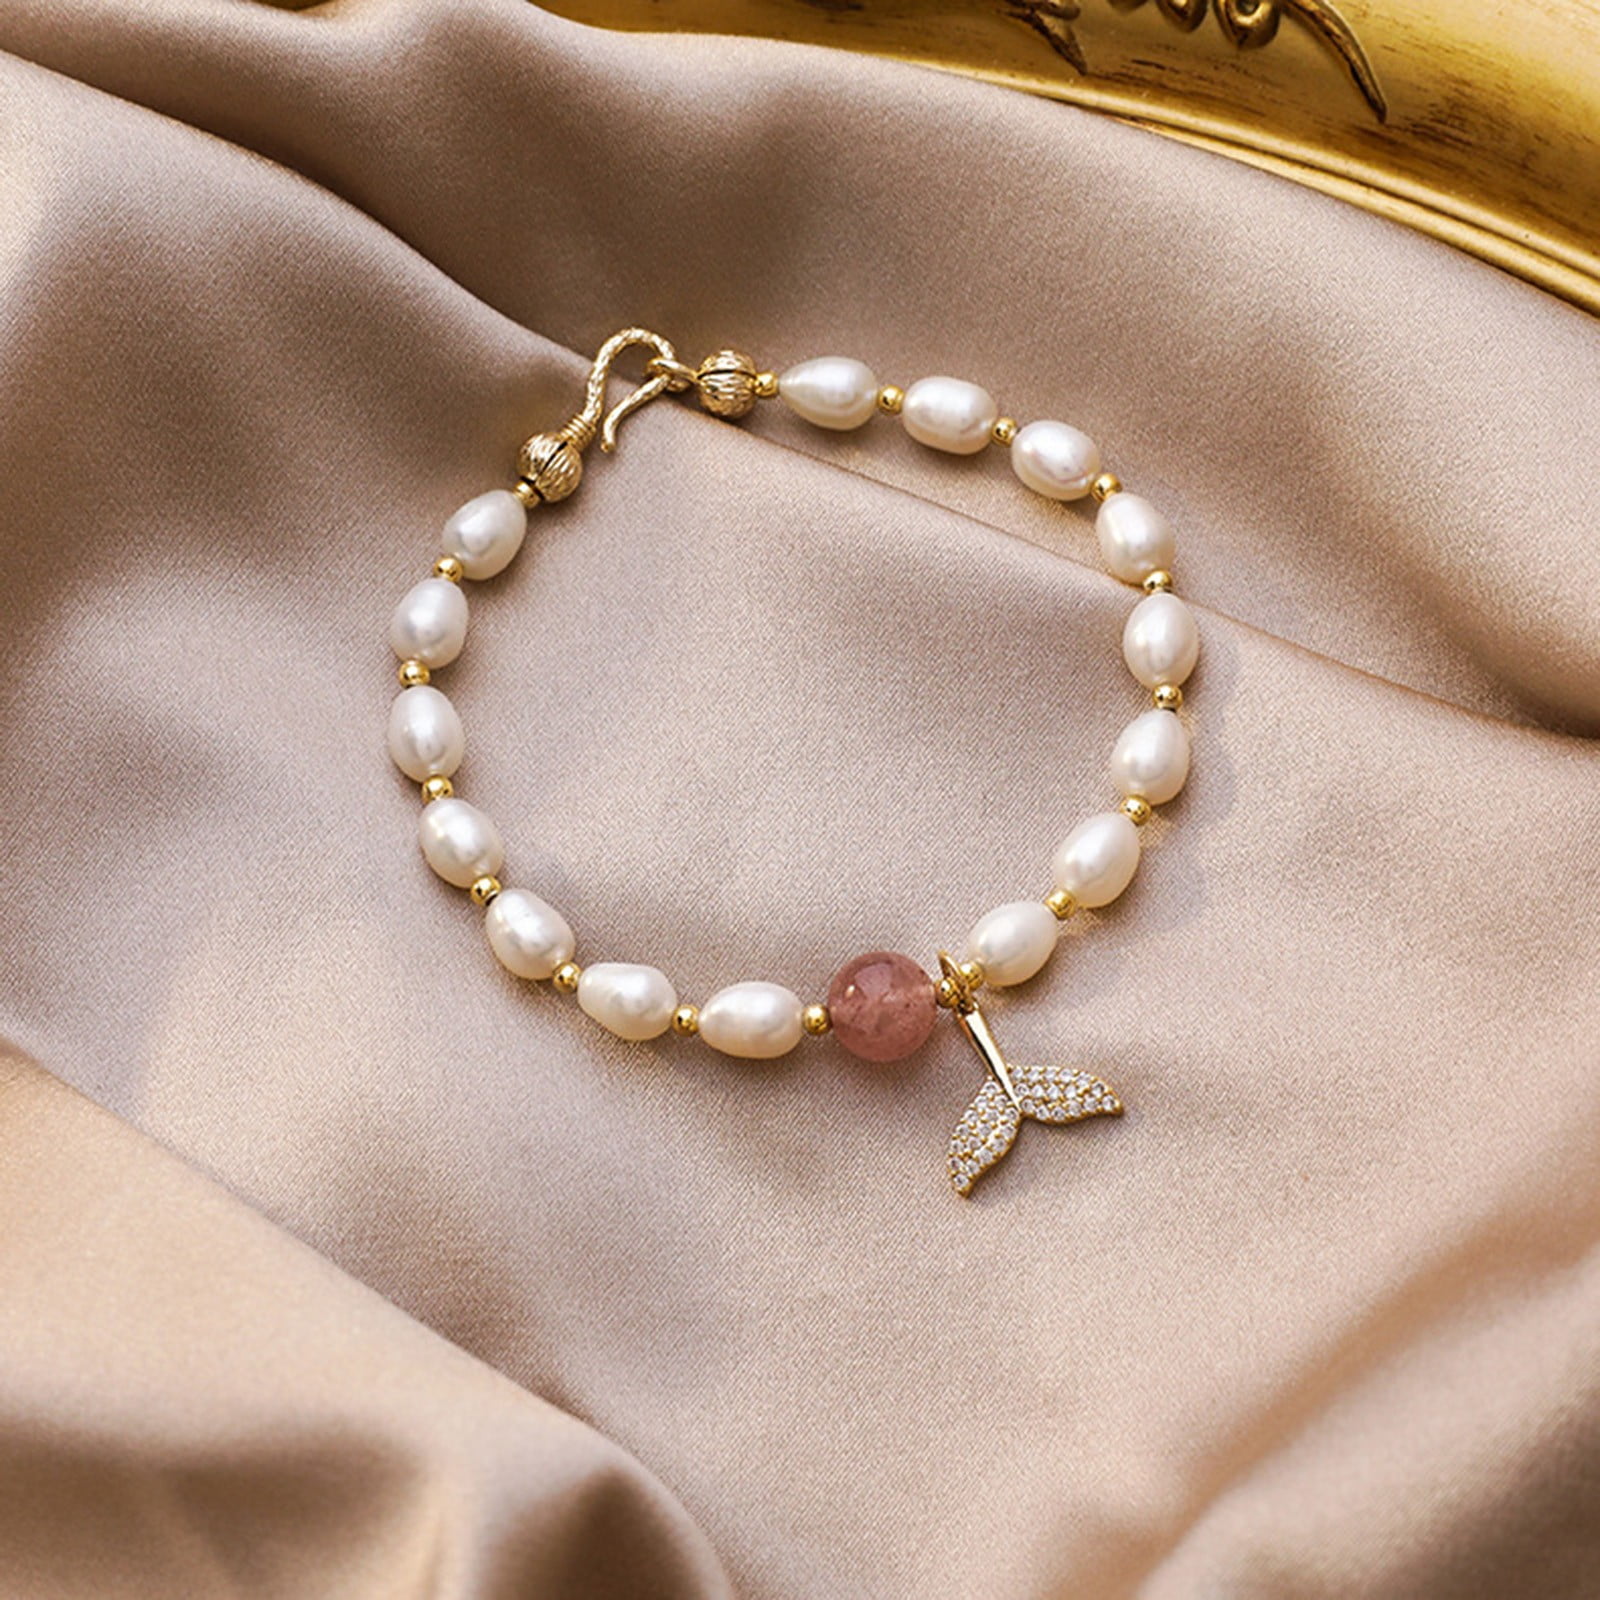 Handmade Jewelry Hand Catenary Pearl Bracelet Elastic Bangle Beads Bracelets